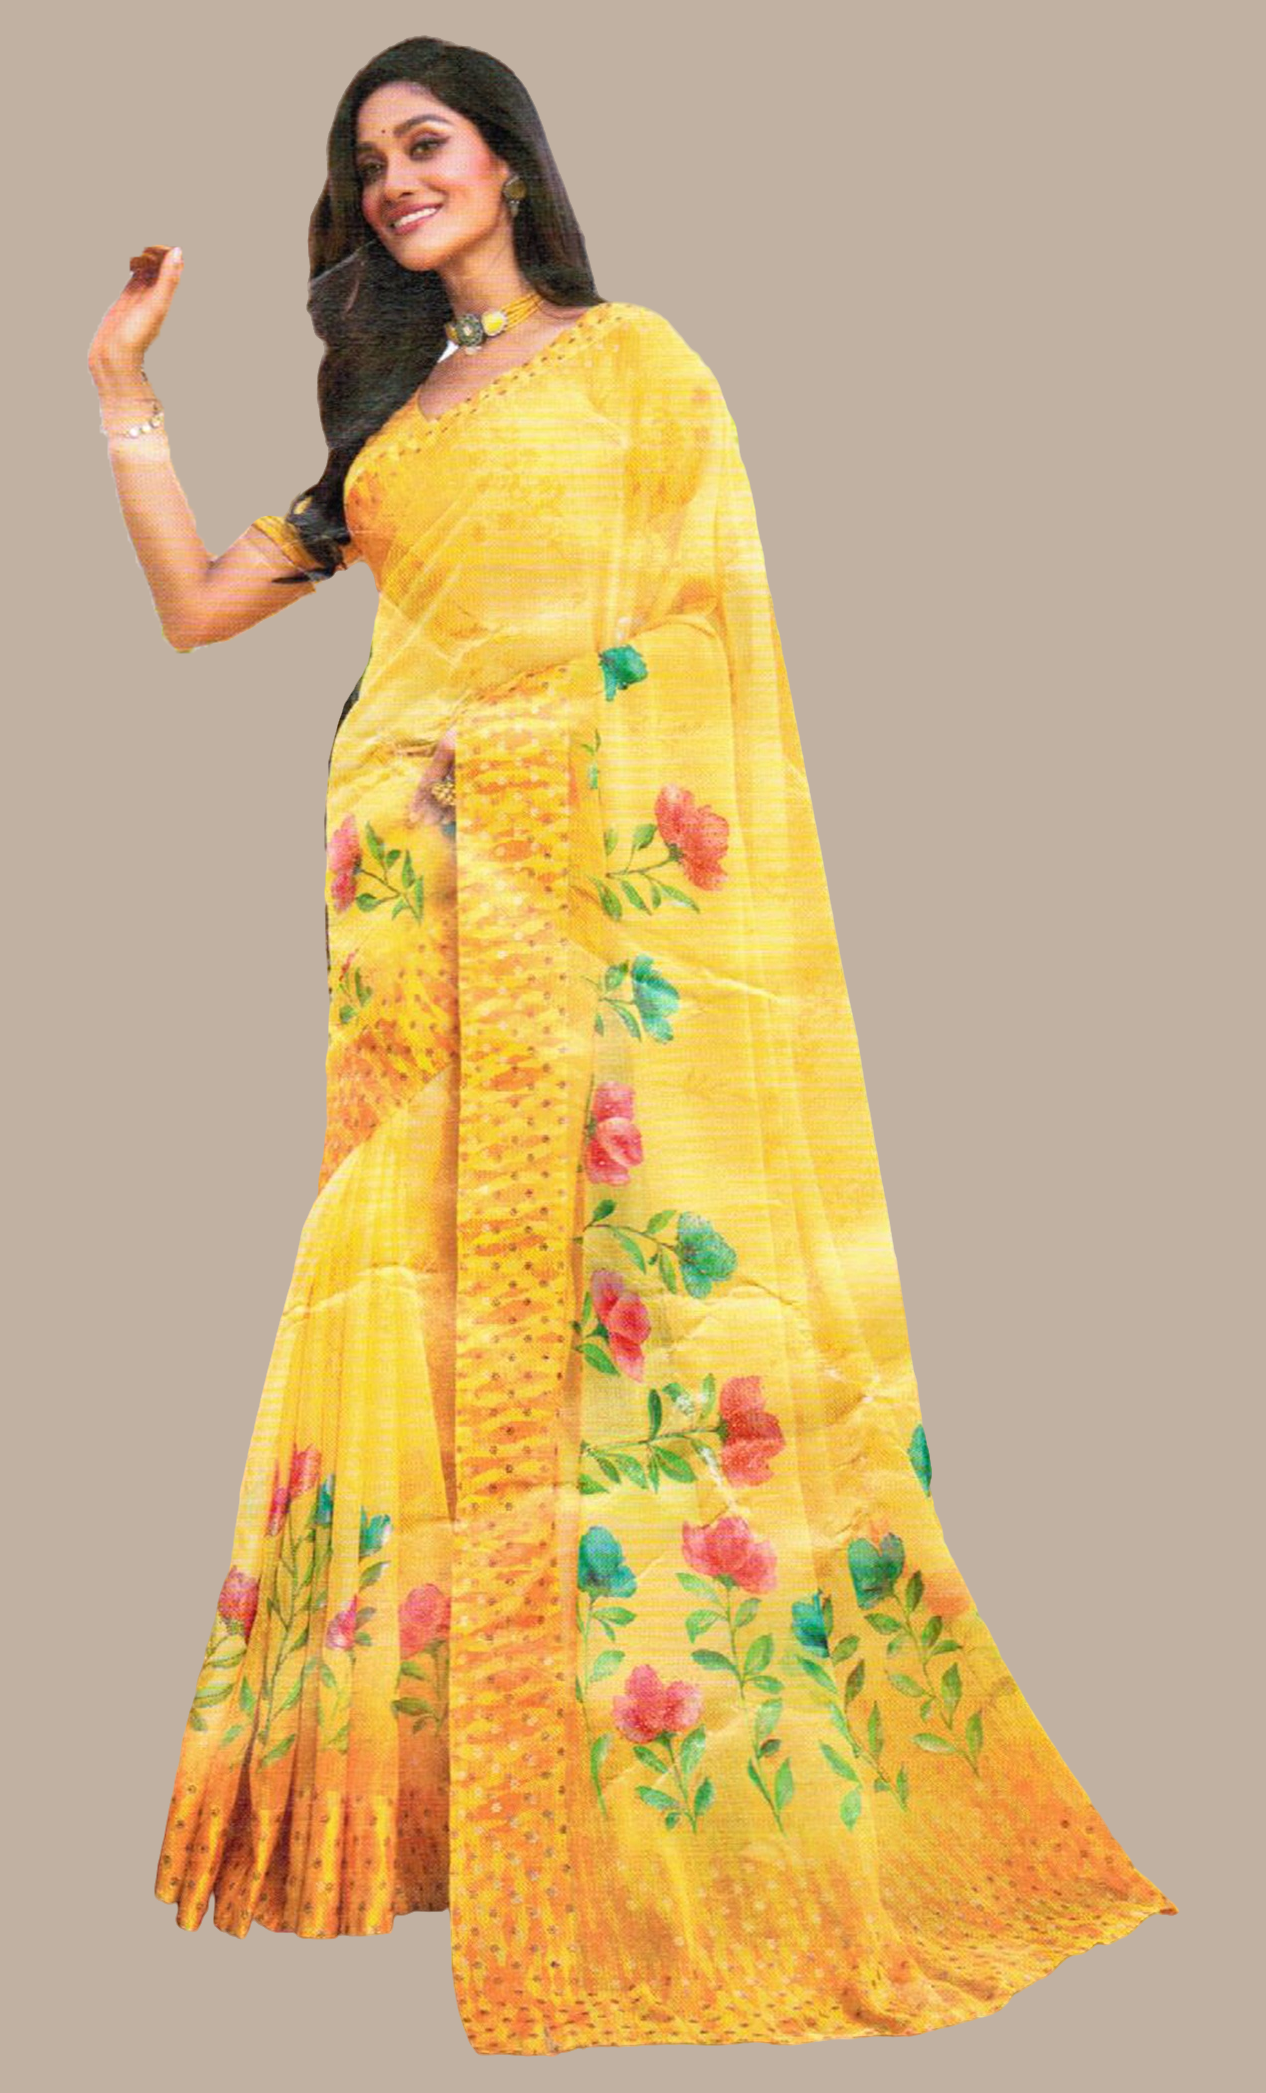 Canary Yellow Floral Printed Sari